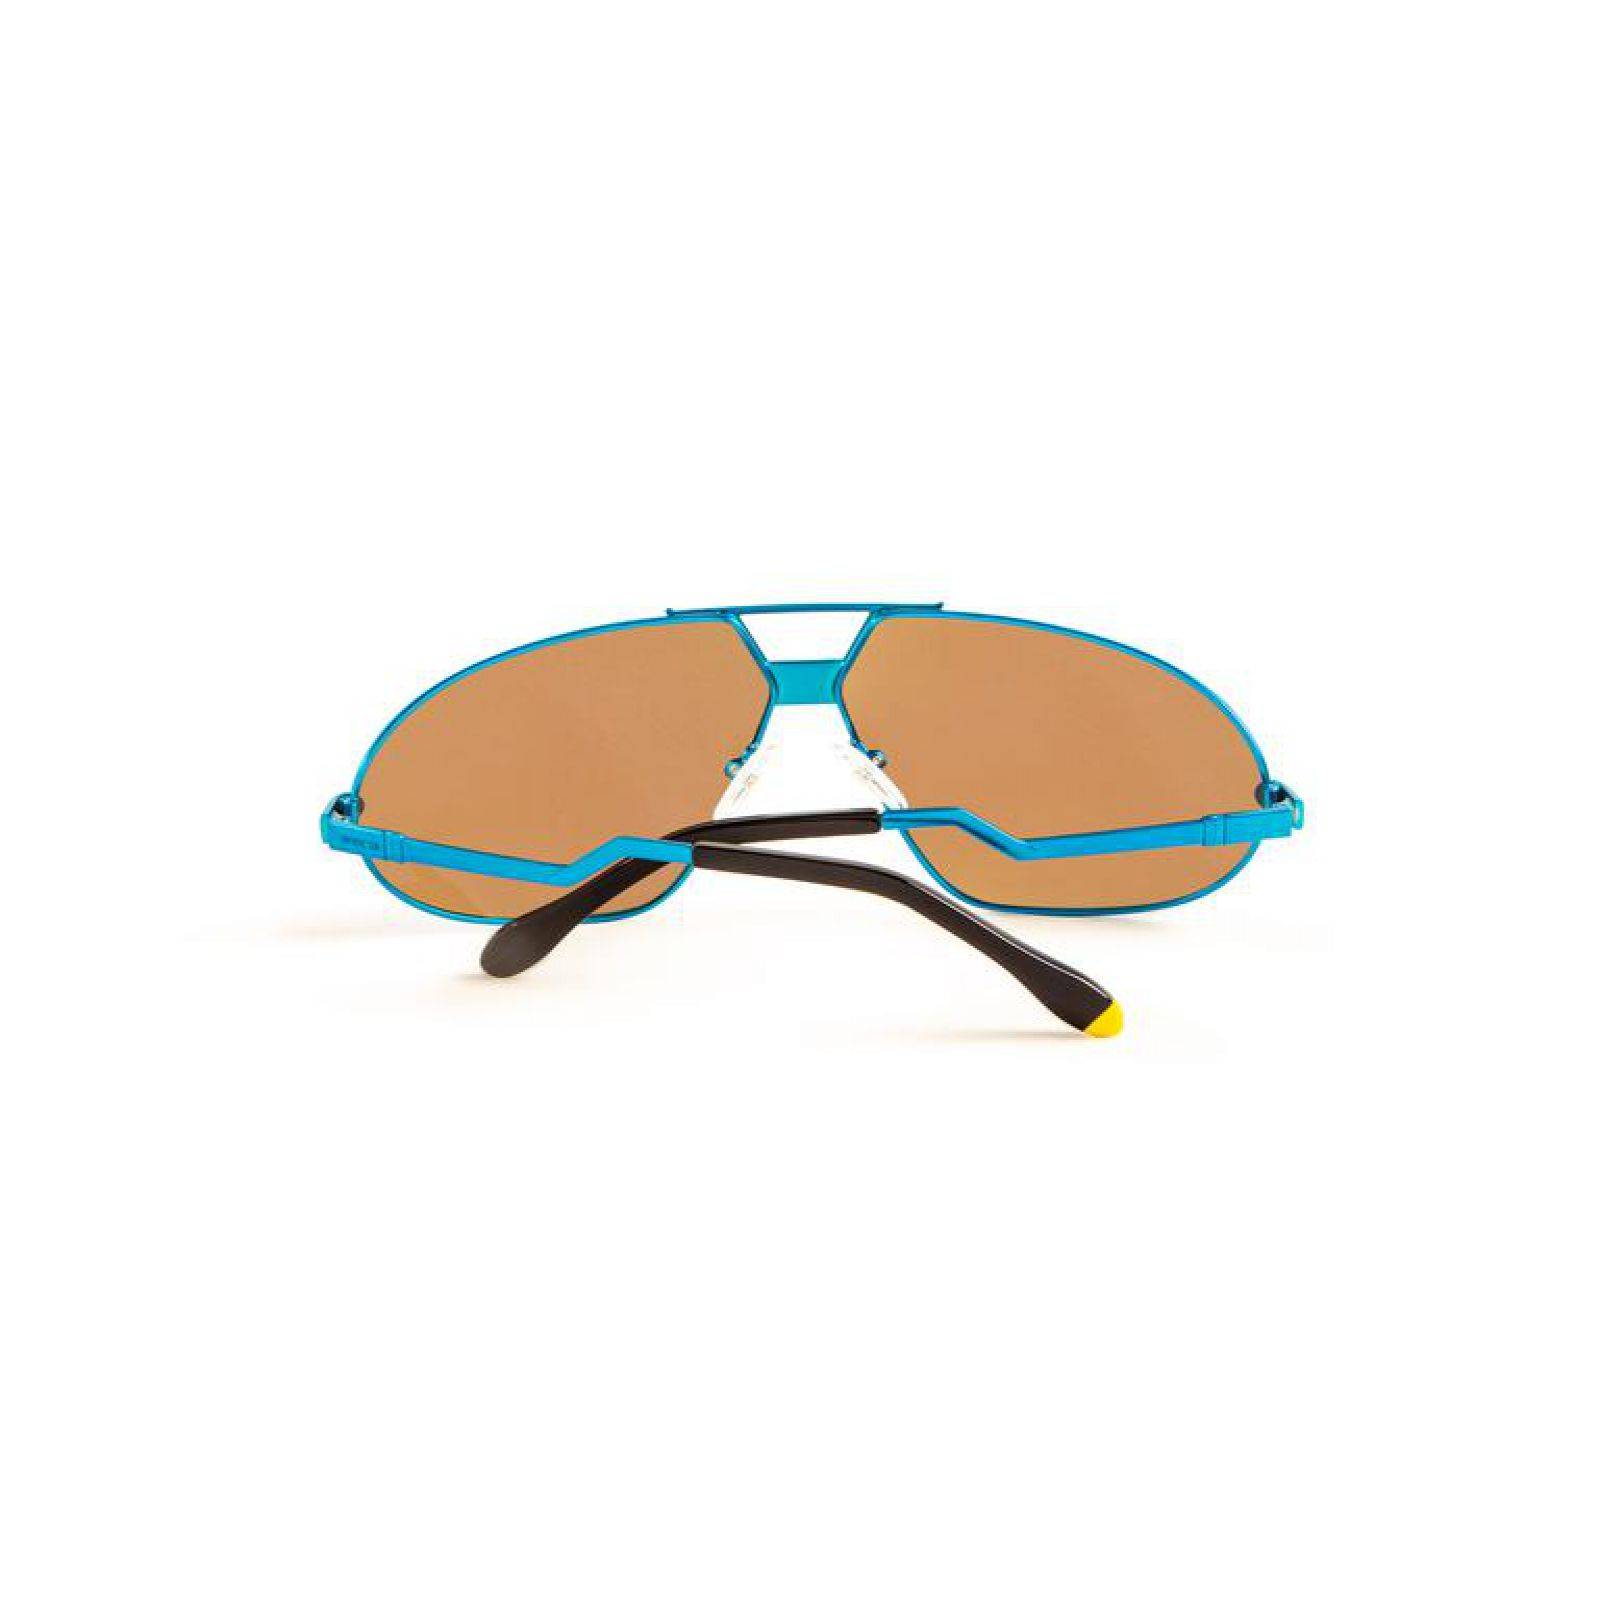 Gafas Invicta Eyewear I 24453-BOL-06 Azul para Hombre